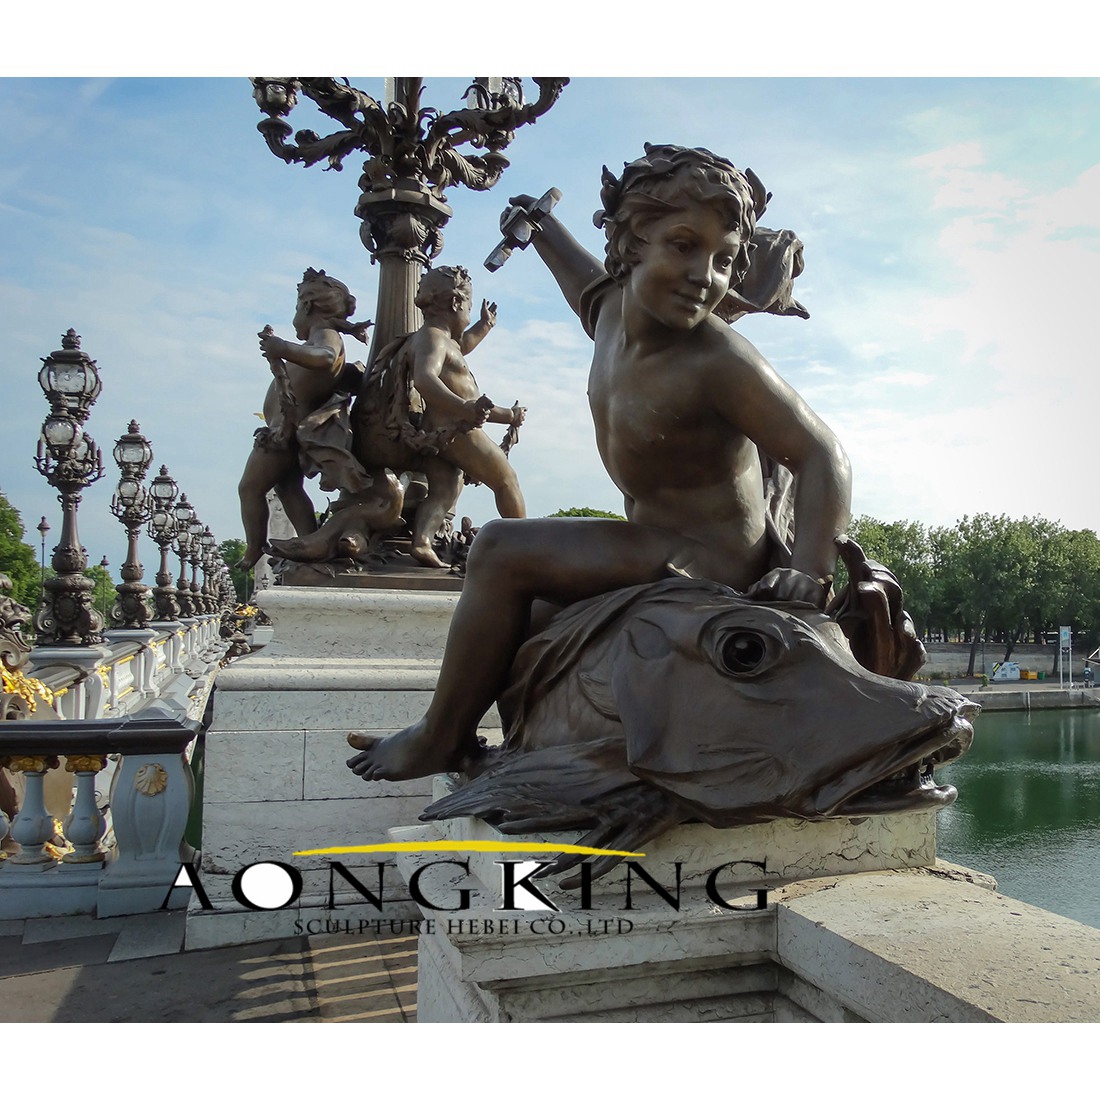 Riding big fish kid bronze statue